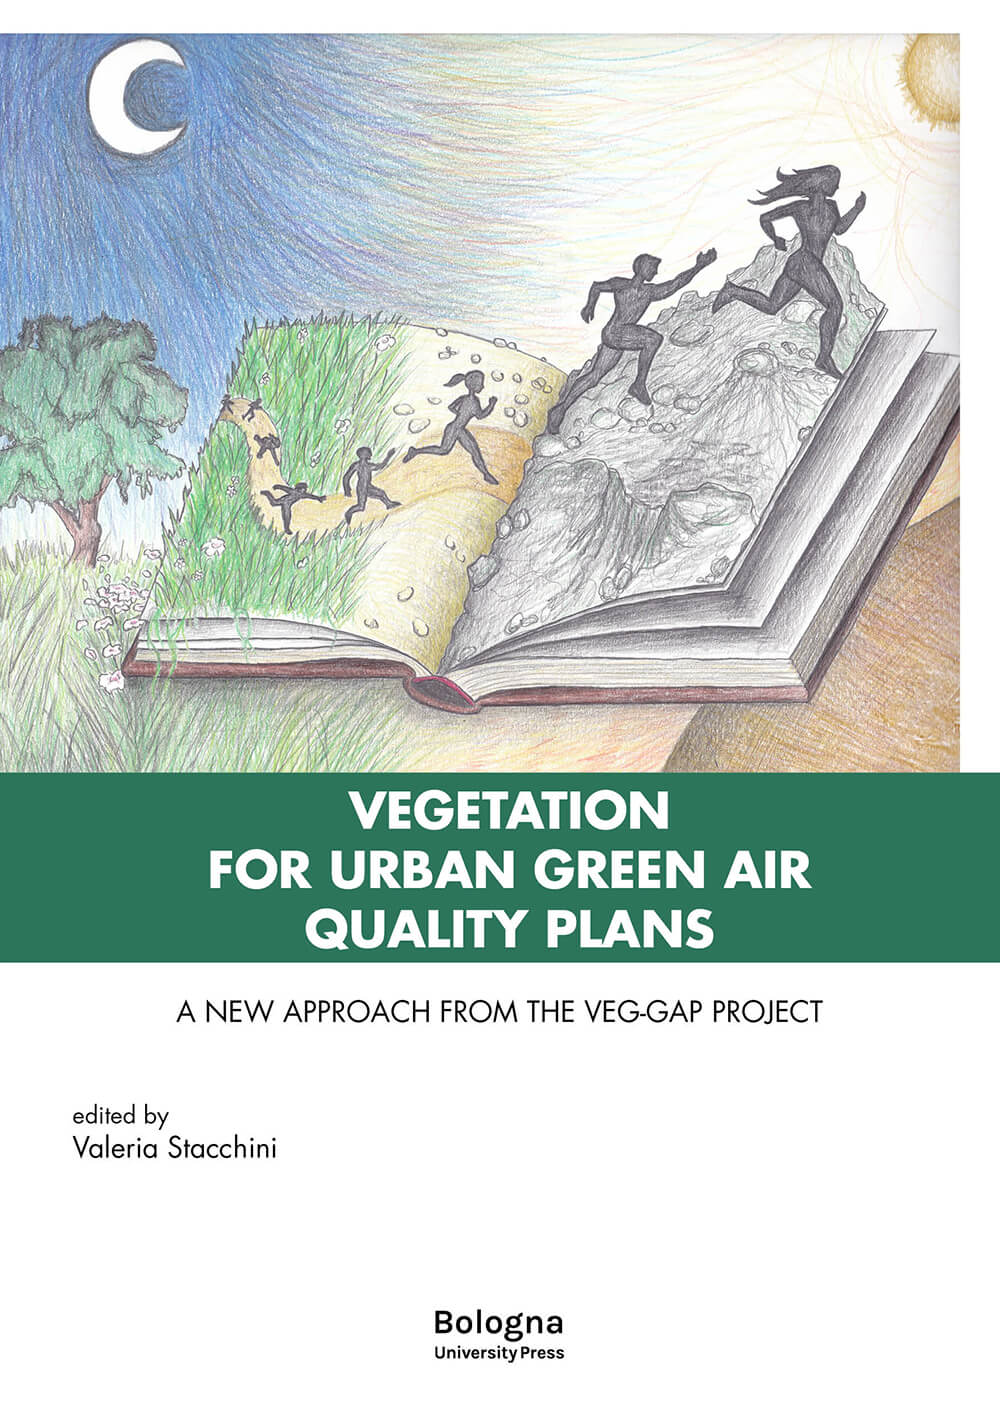 Vegetation for urban green air quality plans - Bologna University Press